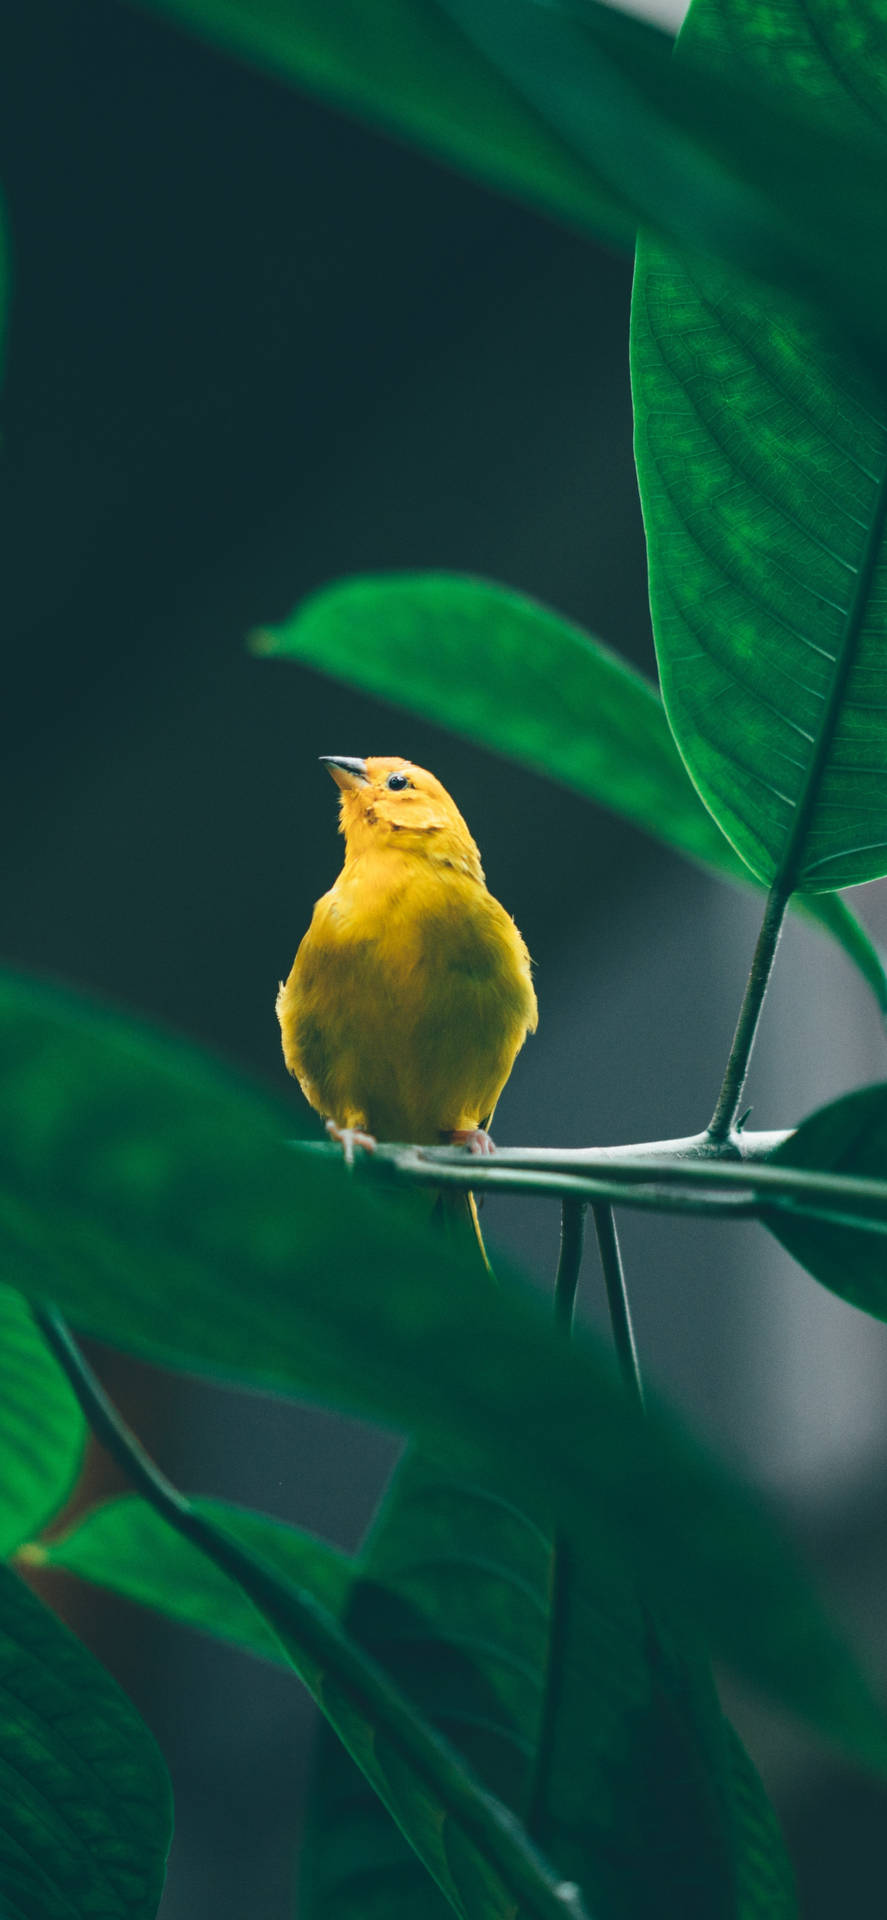 Yellow Canary Bird In Focus Wallpaper